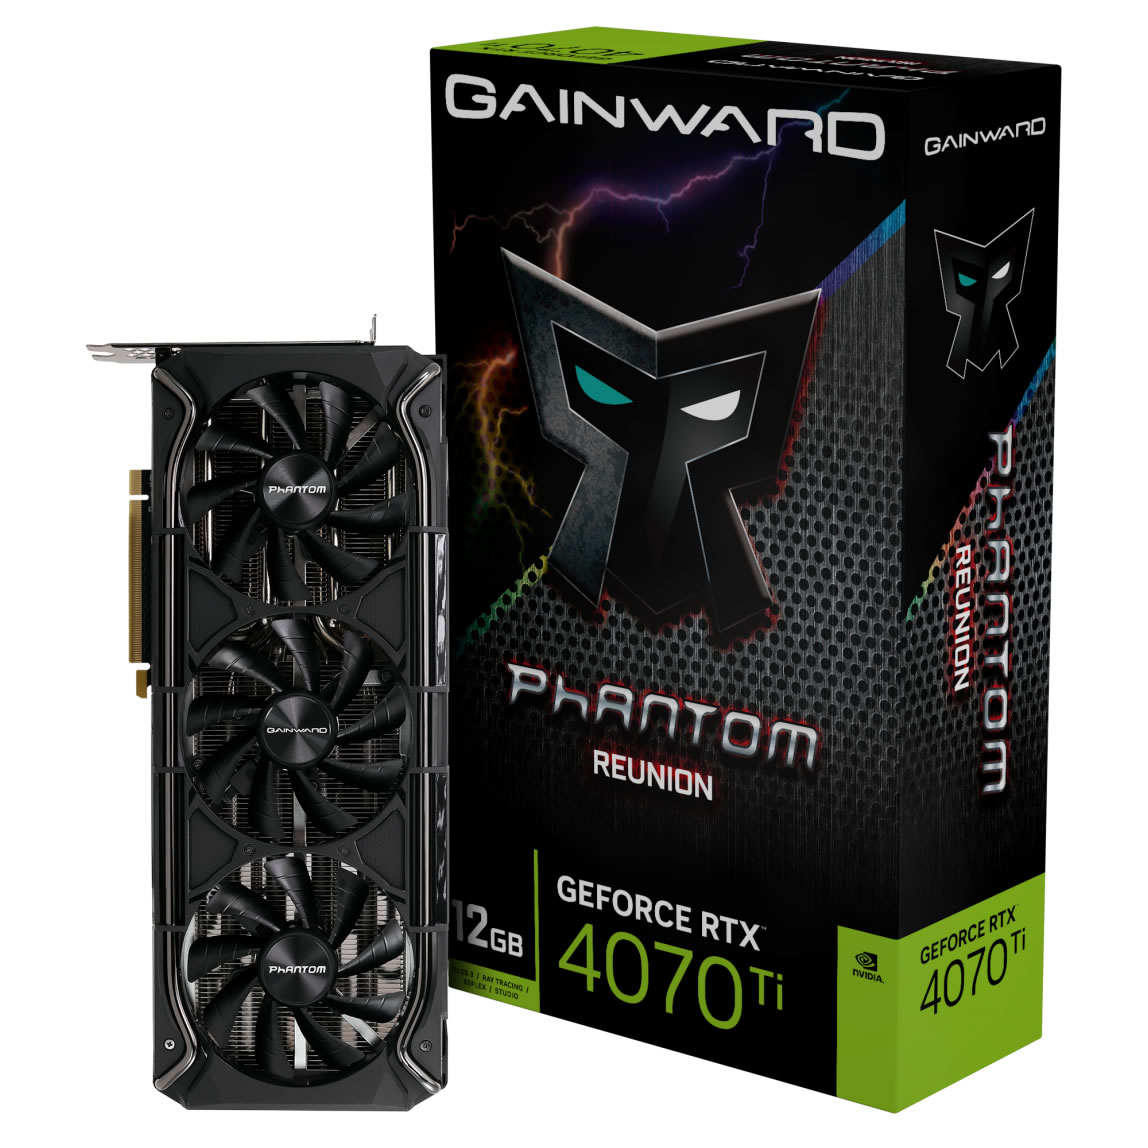 Gainward - B Grade Gainward GeForce RTX 4070Ti Phantom Reunion 12GB GDDR6X PCI-Express Graphics Card